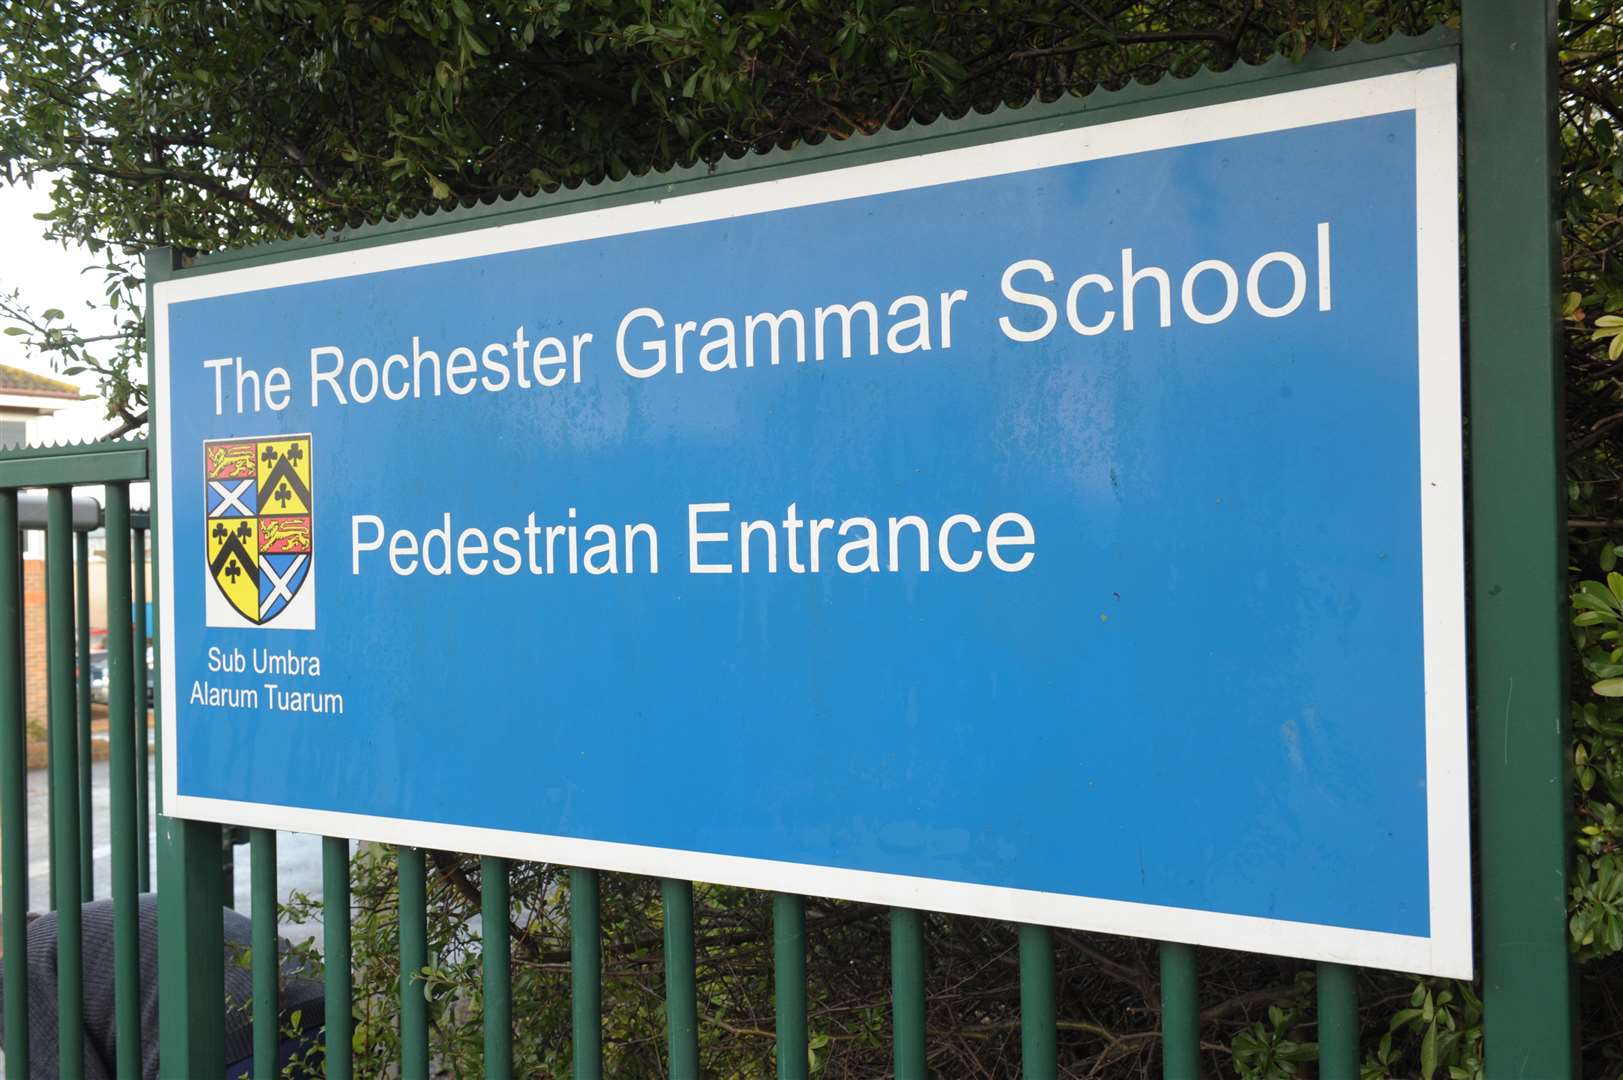 Rochester Grammar School